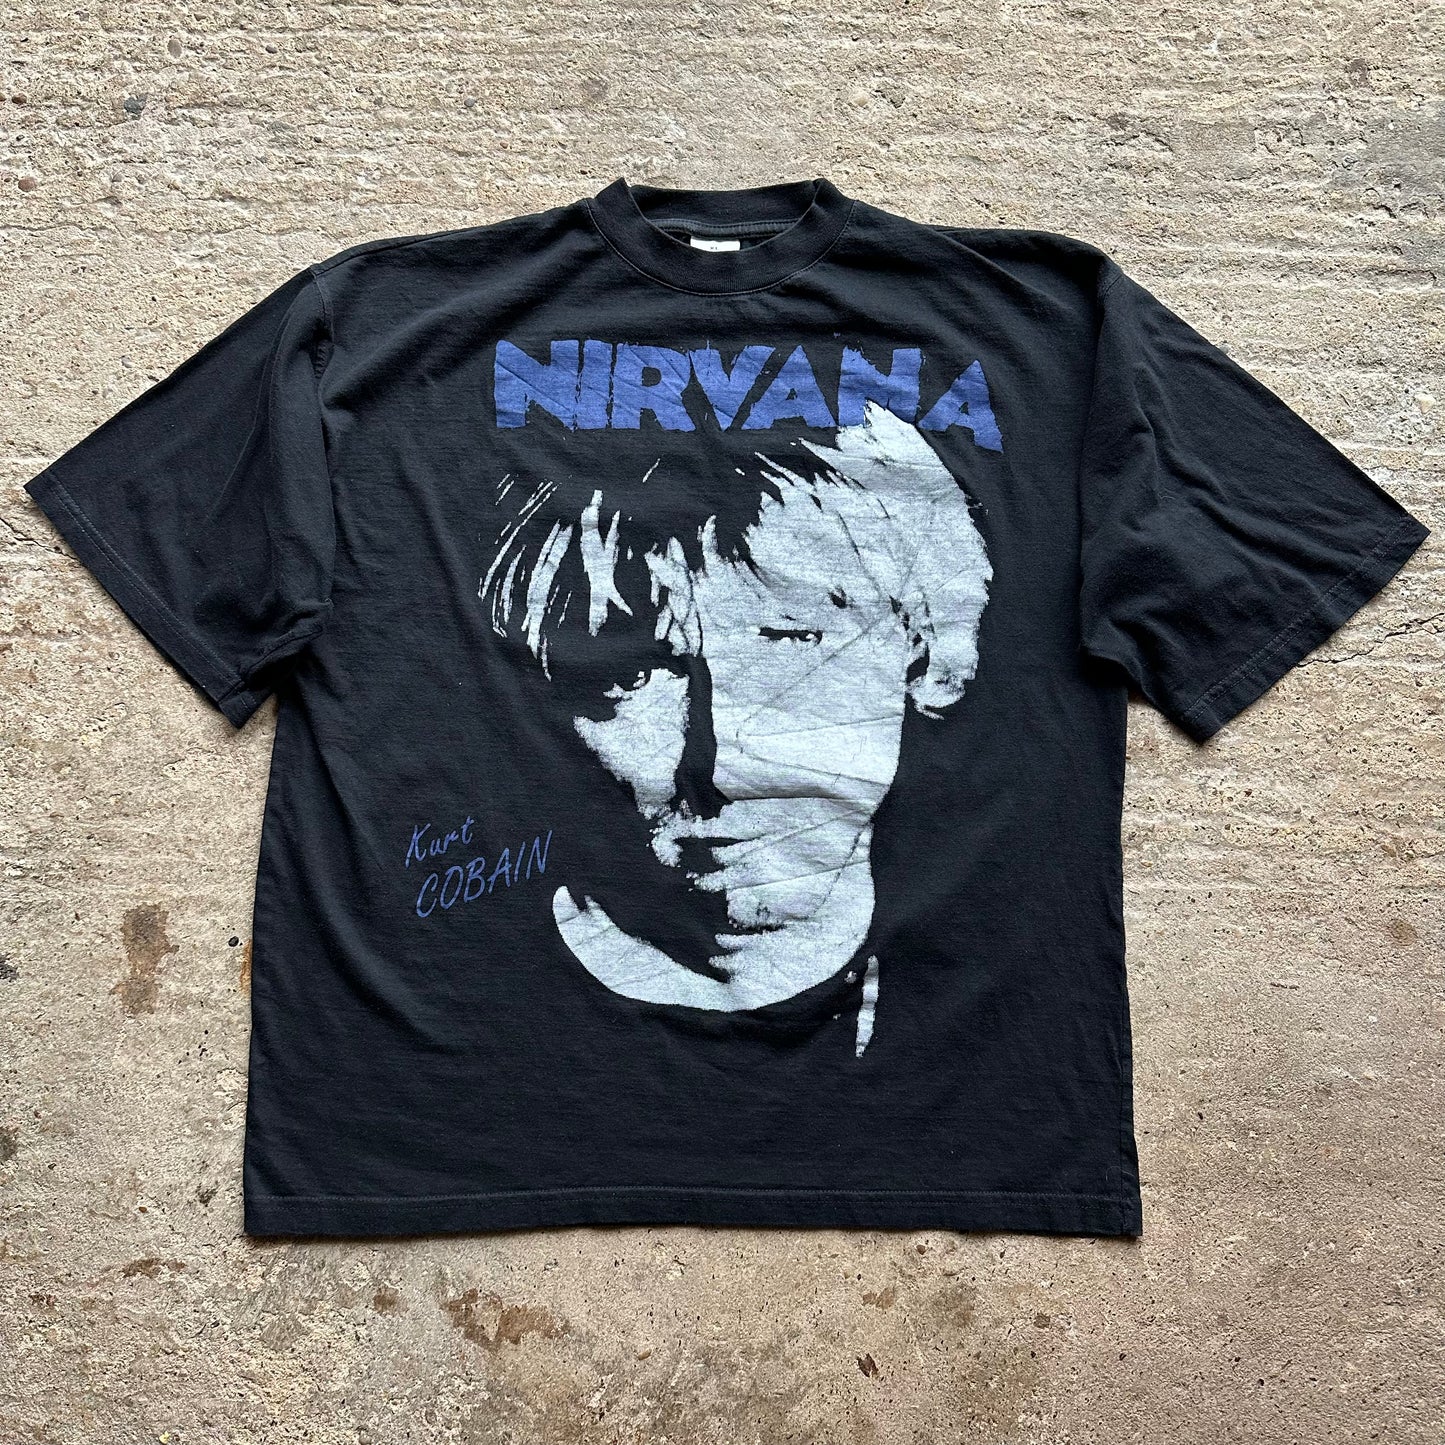 Kurt Cobain/Nirvana - 'The worst crime is faking it.' - 90's - L